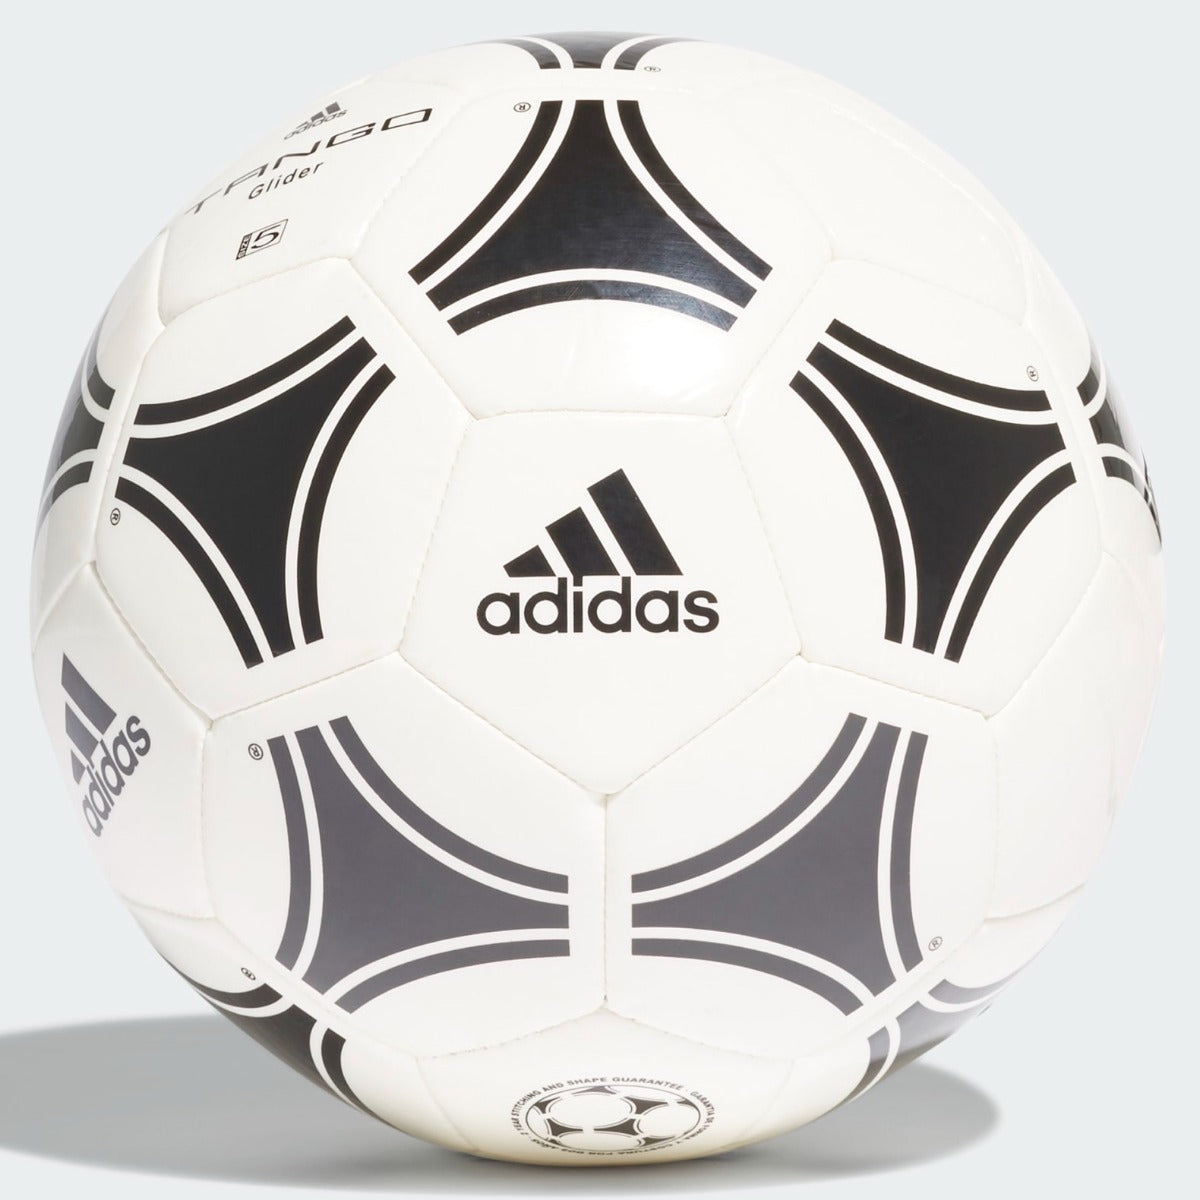 Adidas Tango Glider Soccer Ball - White-Black